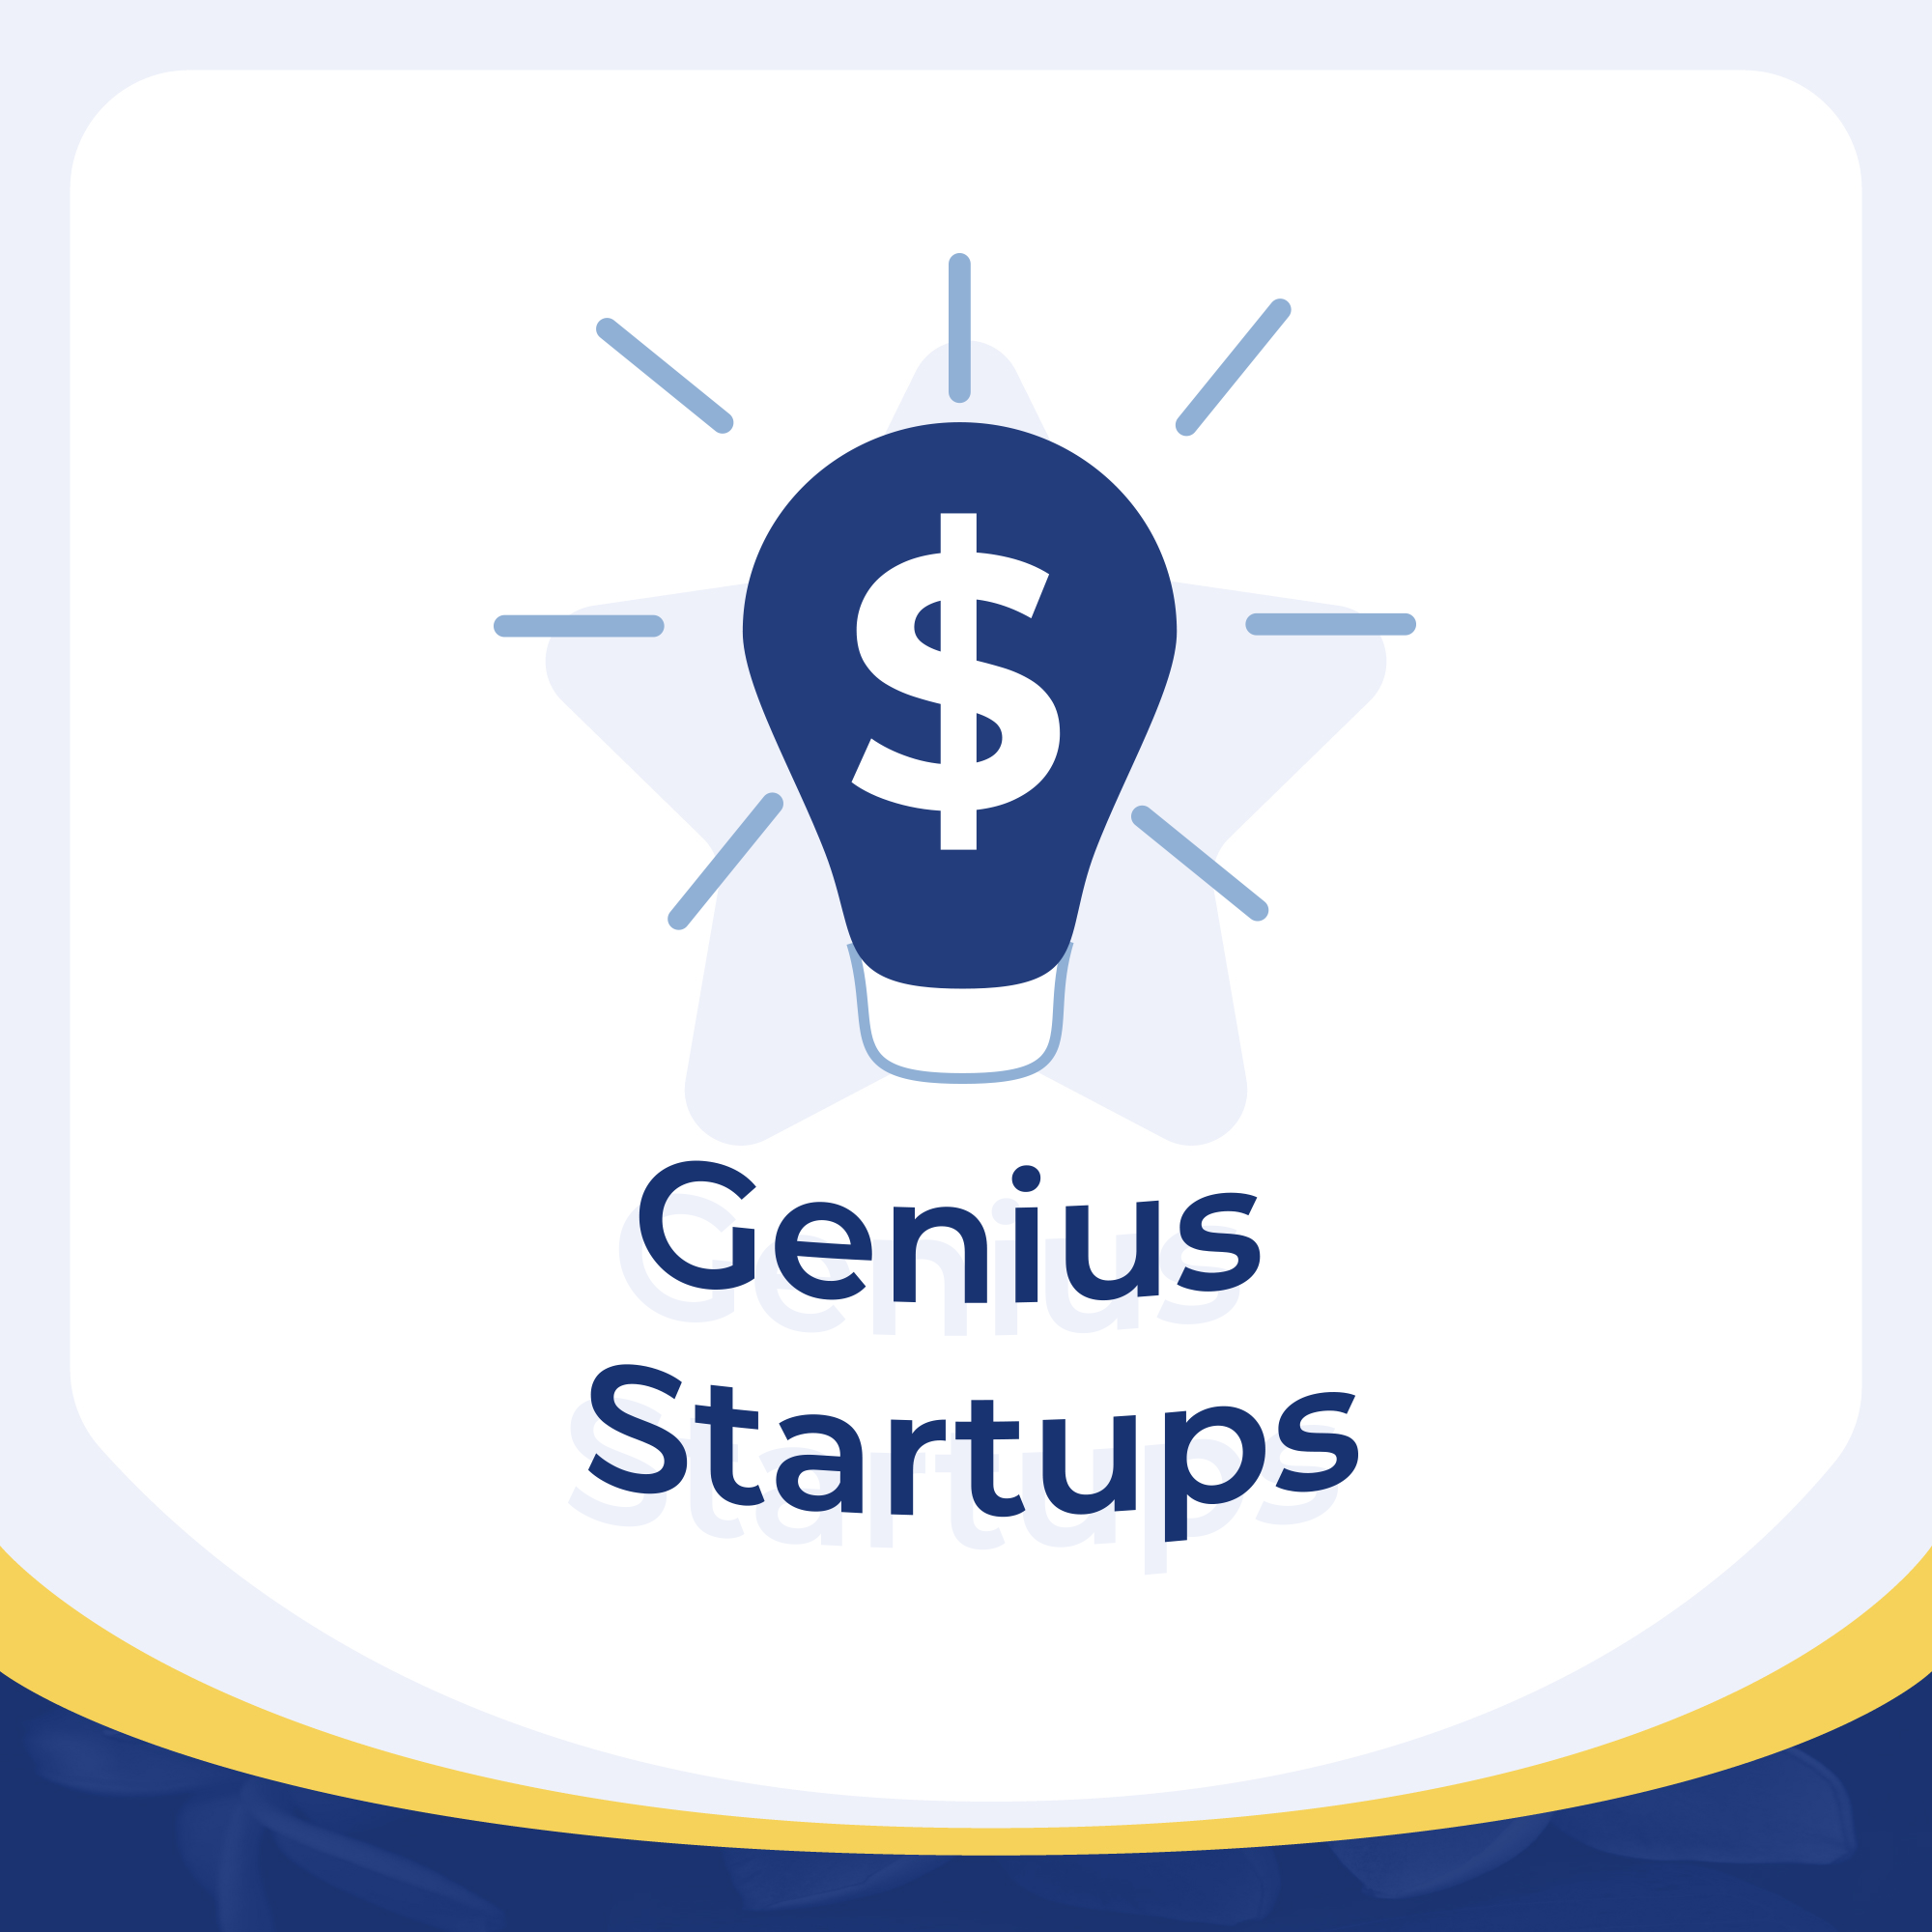 Genious Startups